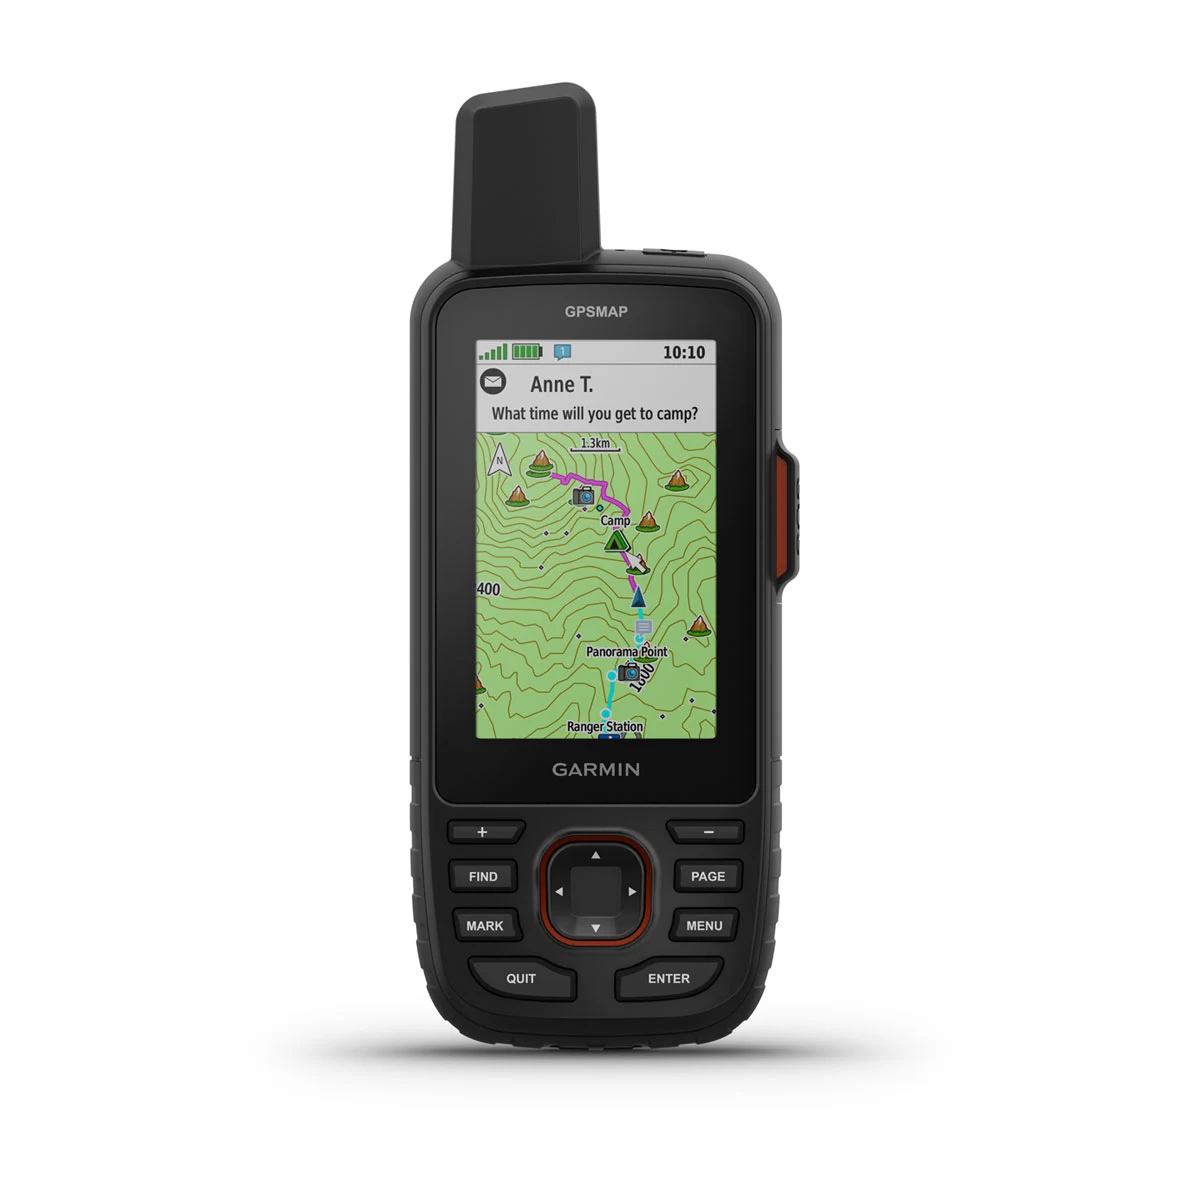 First Look: Garmin GPSMAP 67 and eTrex SE Handheld GPS Units